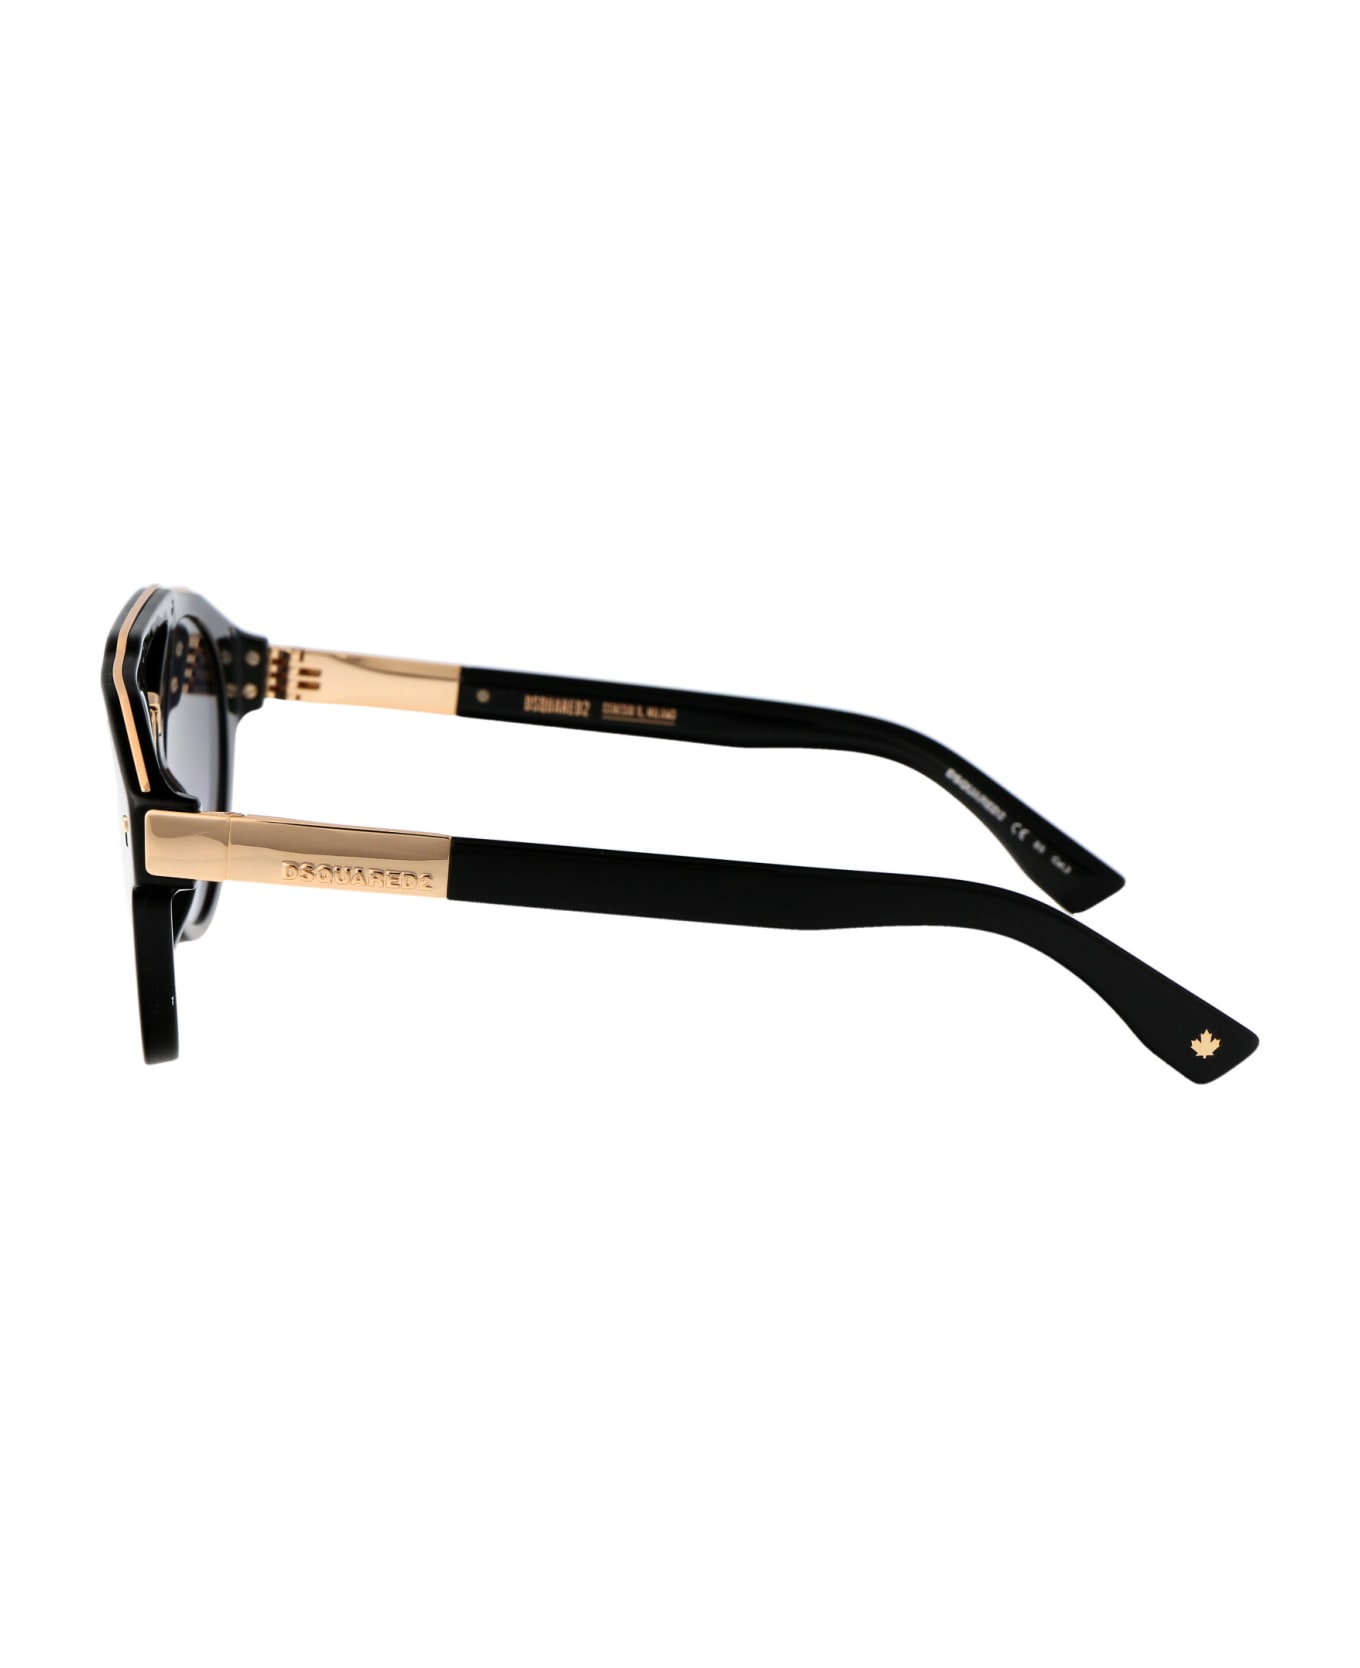 Dsquared2 Eyewear D2 0085/s Sunglasses - 2M29O BLACK GOLD サングラス